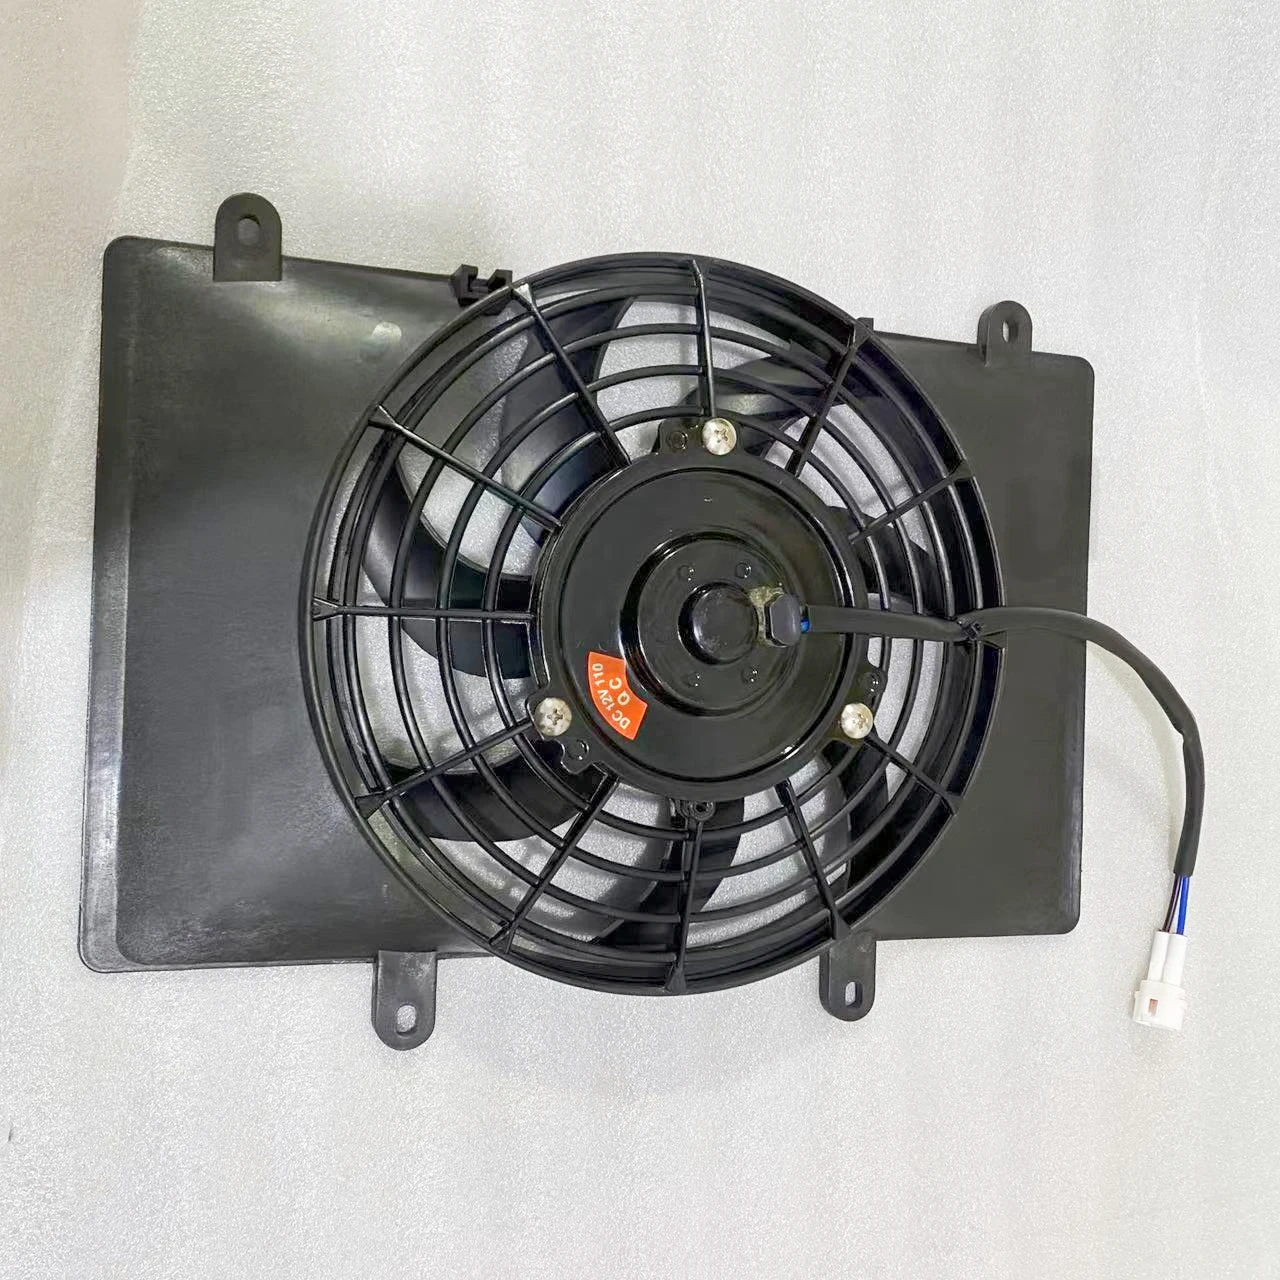 Blower Radiator Cooling Fan Shroud Assy for Yamaha Grizzly 660 Hunter YFM660 ATV 2002-2008 5KM-12405-00